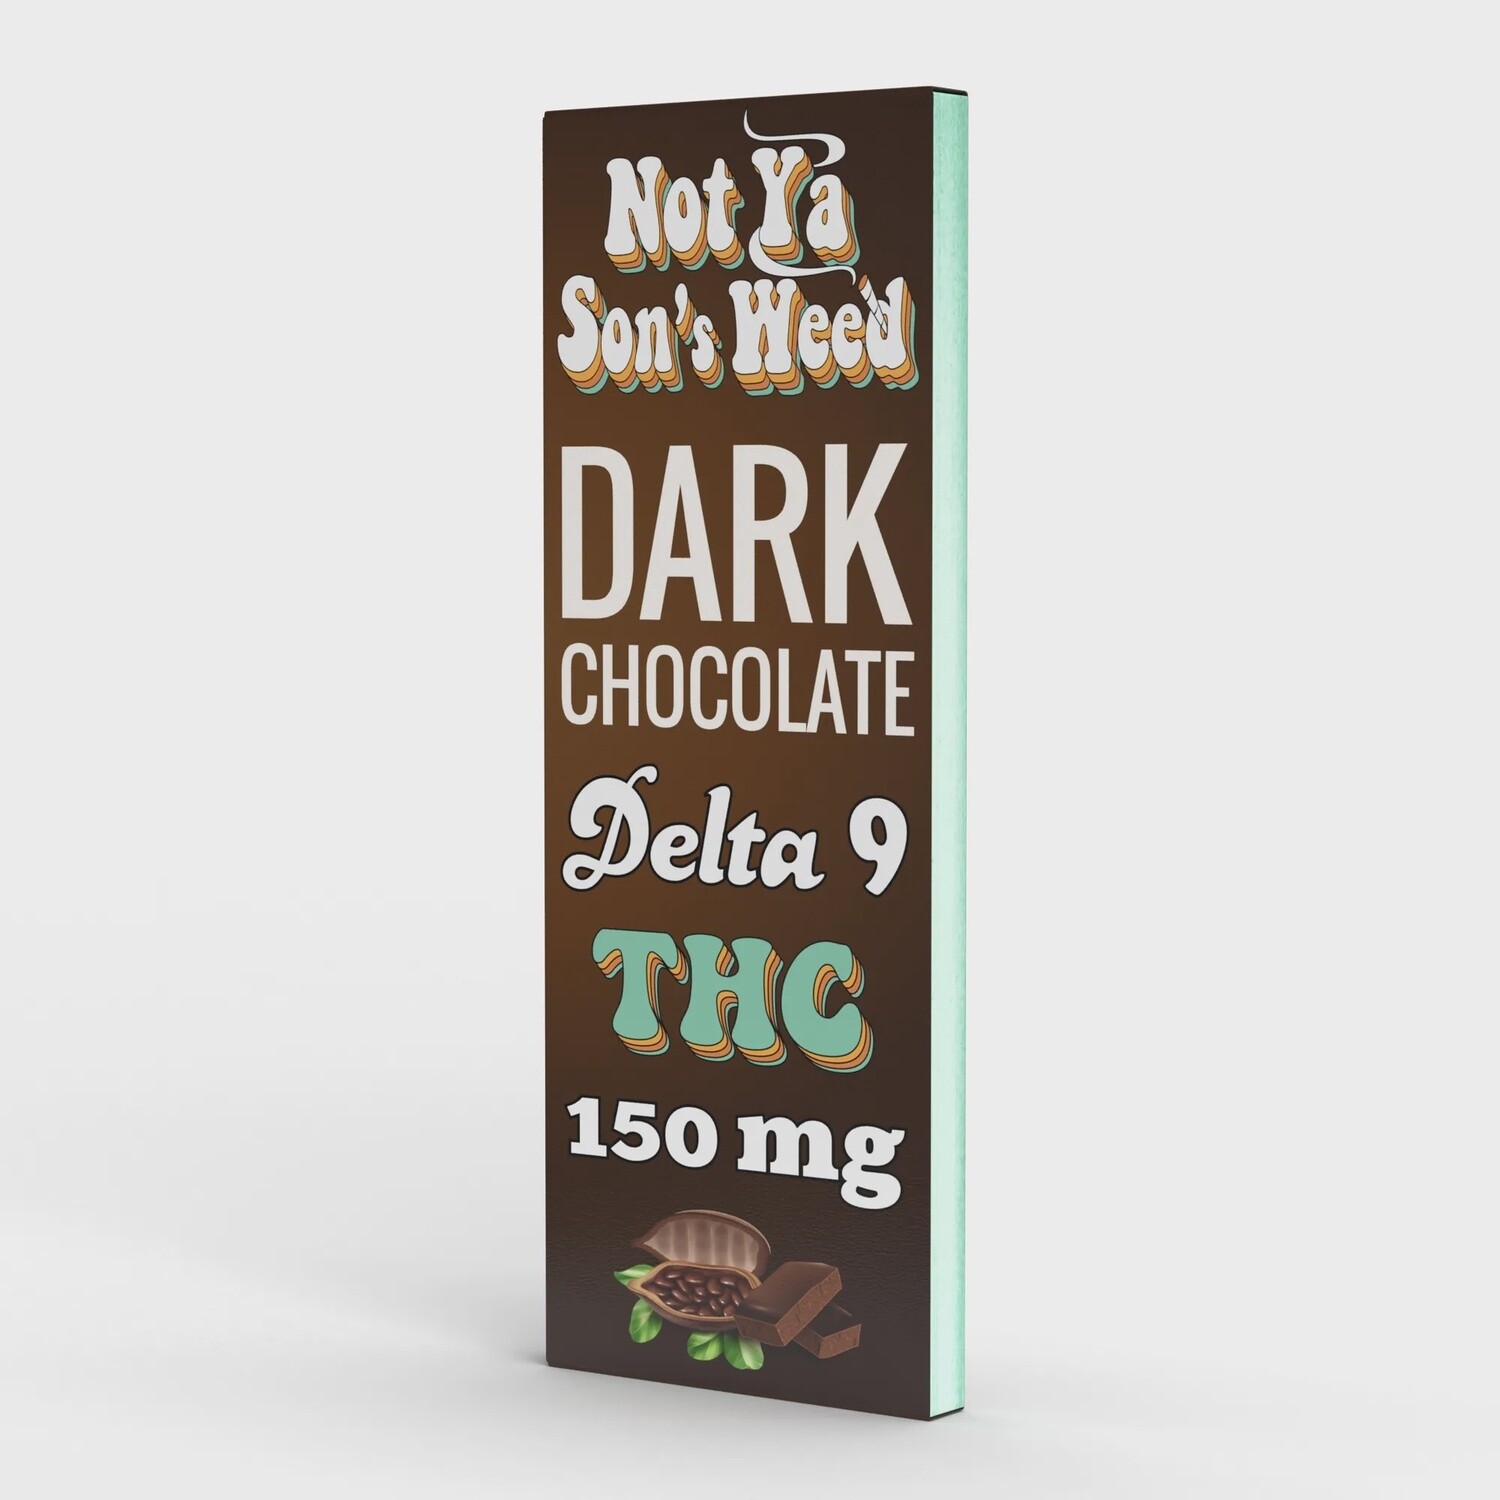 NYSW Delta 9 Dark Chocolate Candy Bar - 150mg